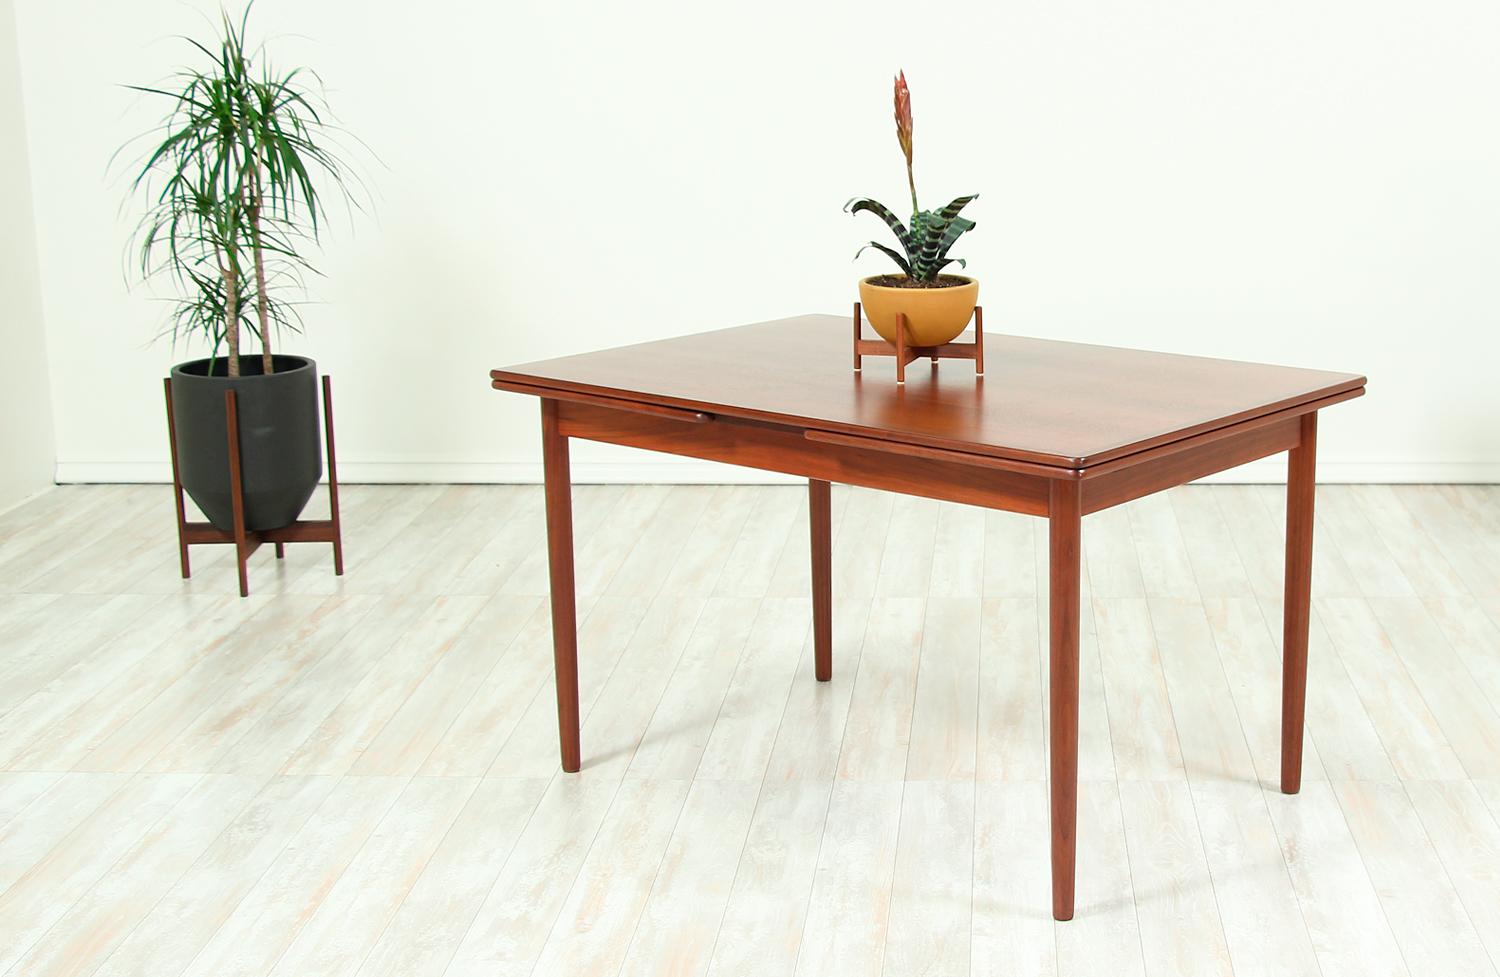 Mid-20th Century Willy Sigh Draw-Leaf Dining Table for H. Sigh & Søn Møbelfabrik